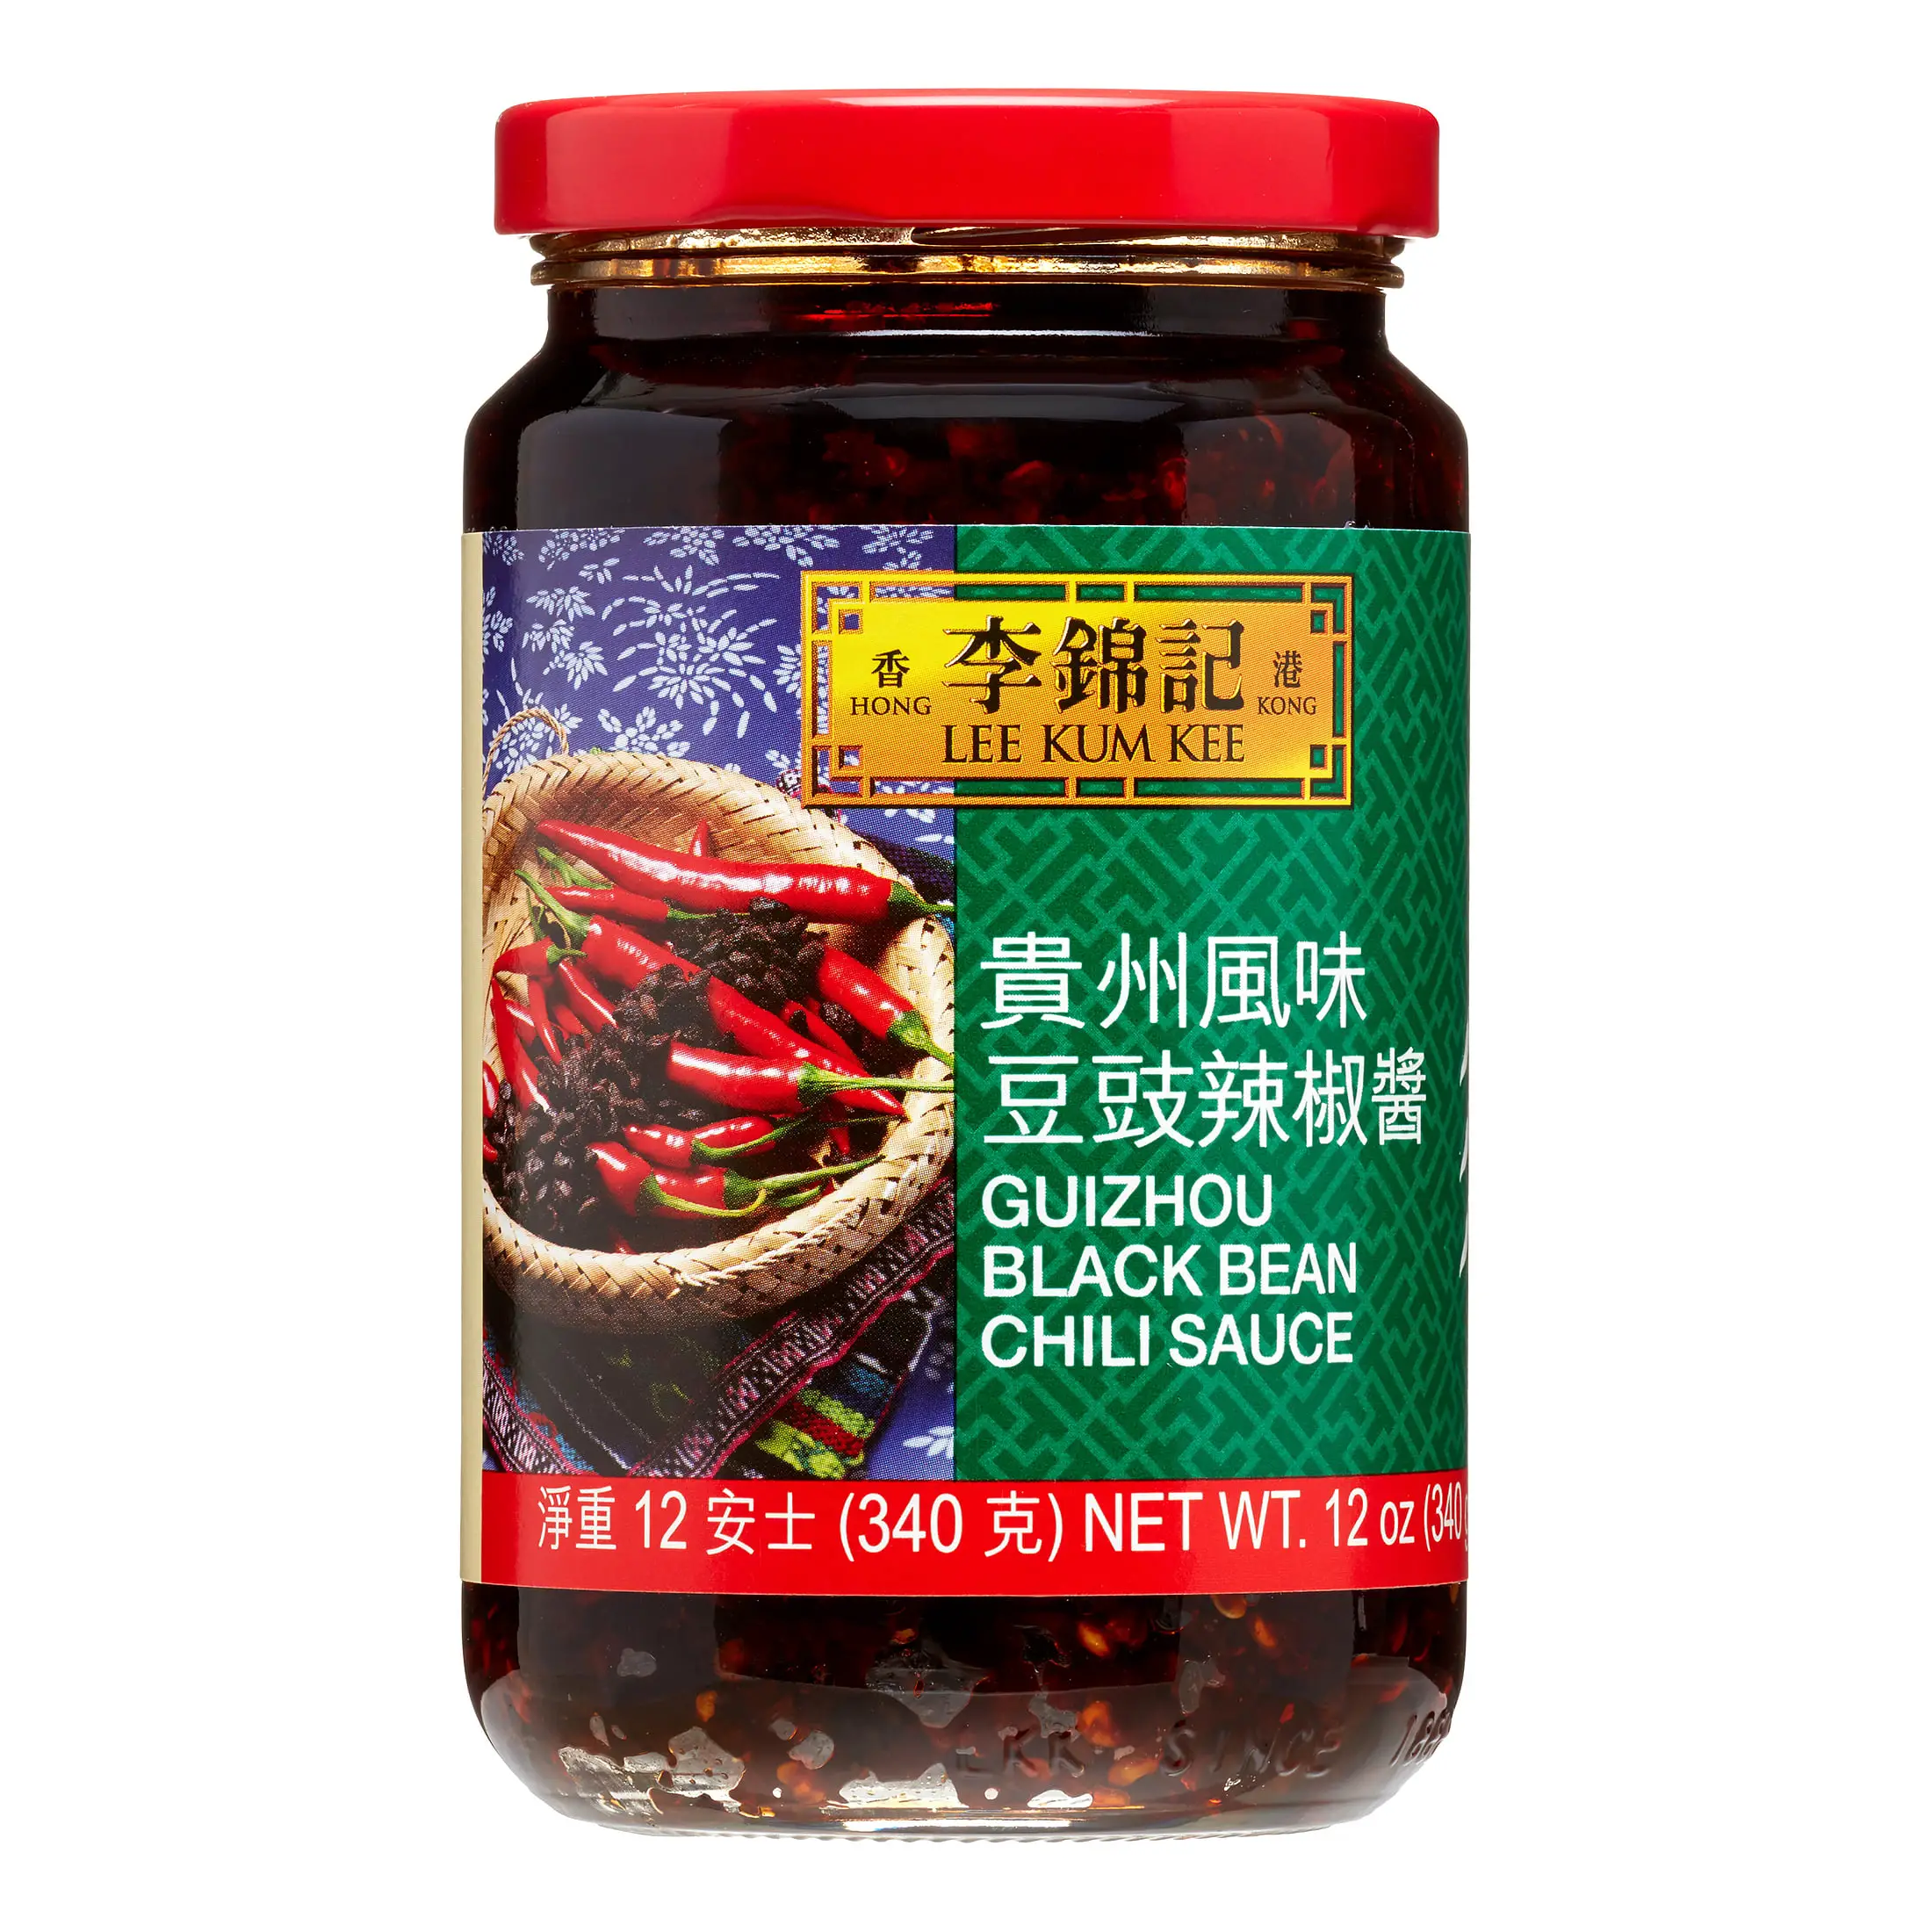 Lee Kum Kee Guizhou Black Bean Chili Sauce, 12 oz